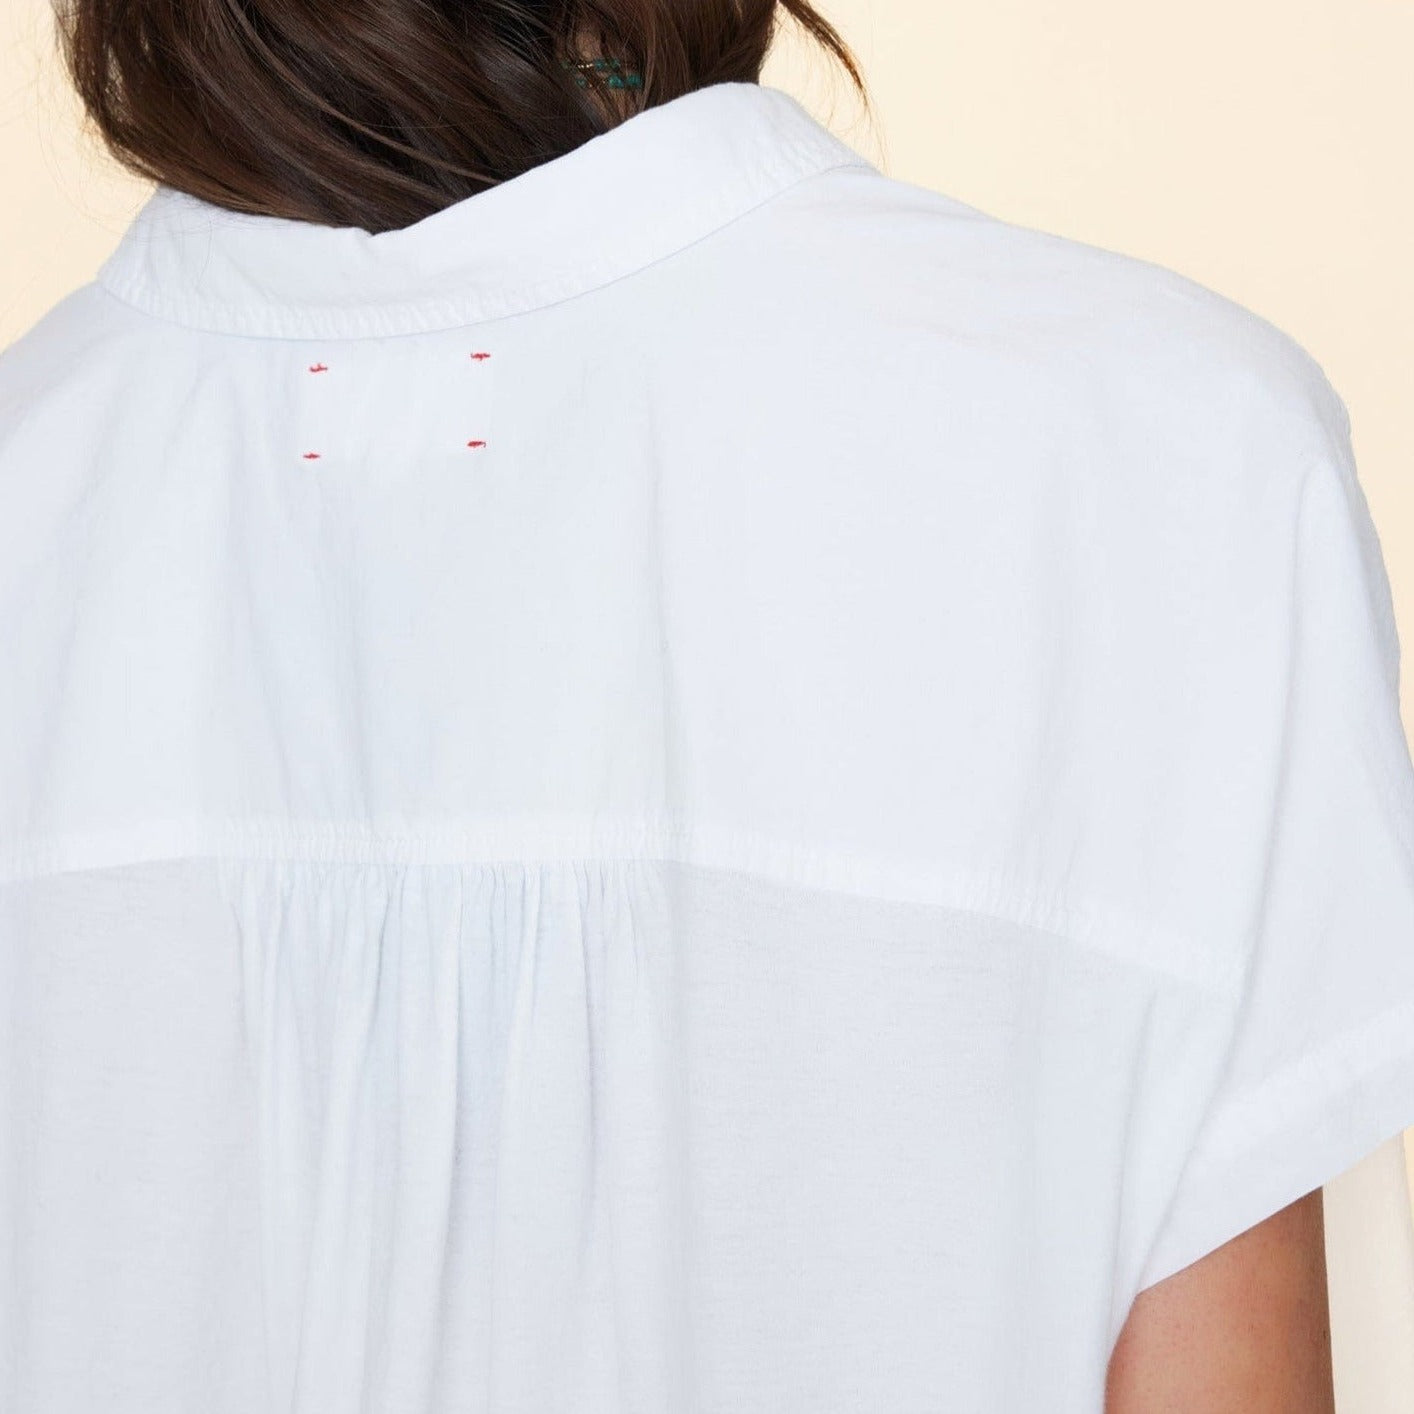 Pax Short Sleeve Shirt in White